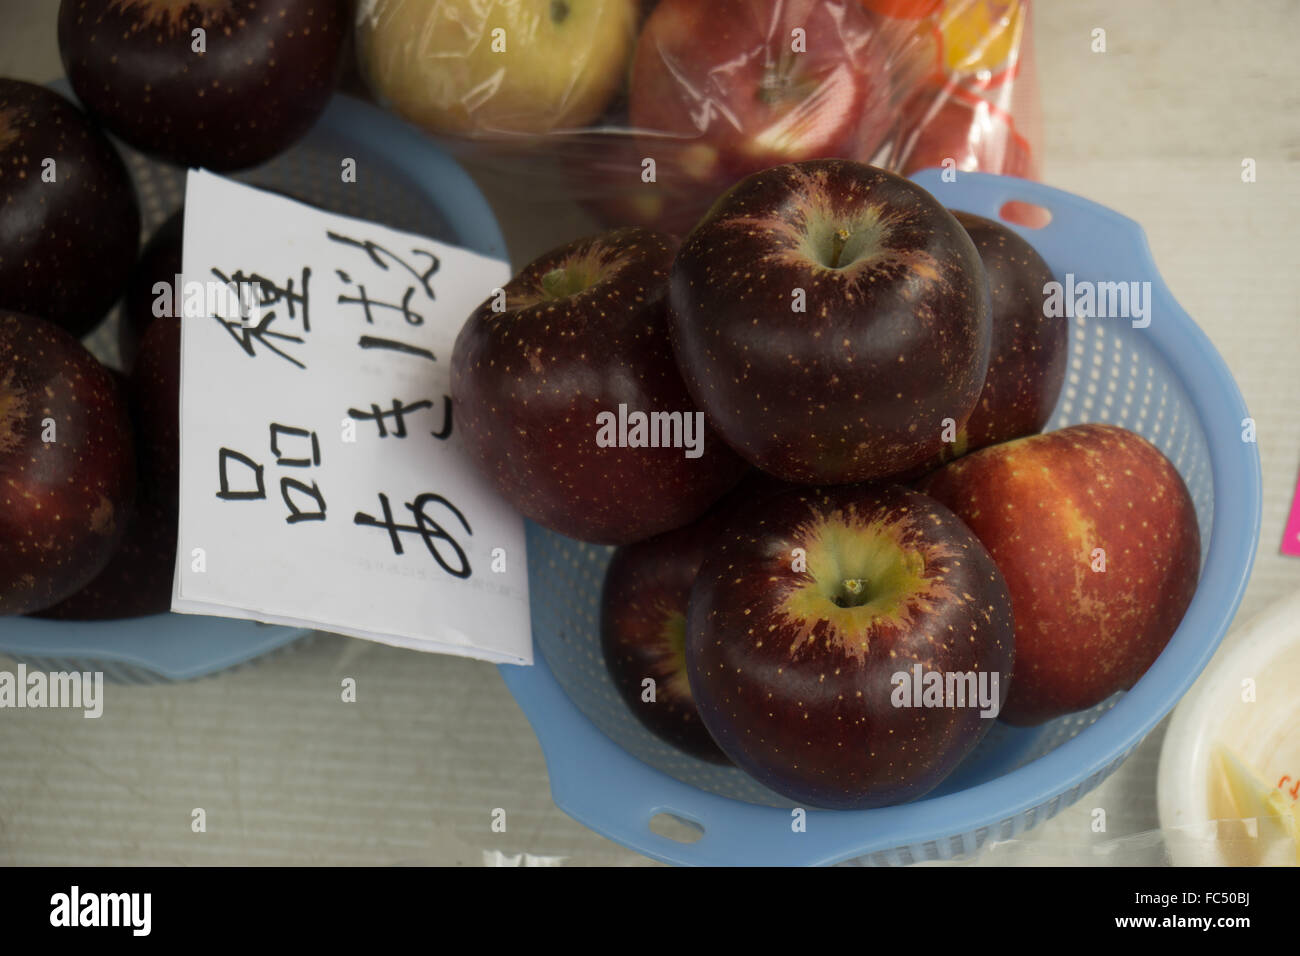 Takayama Fuji apples at street market for sale Stock Photo